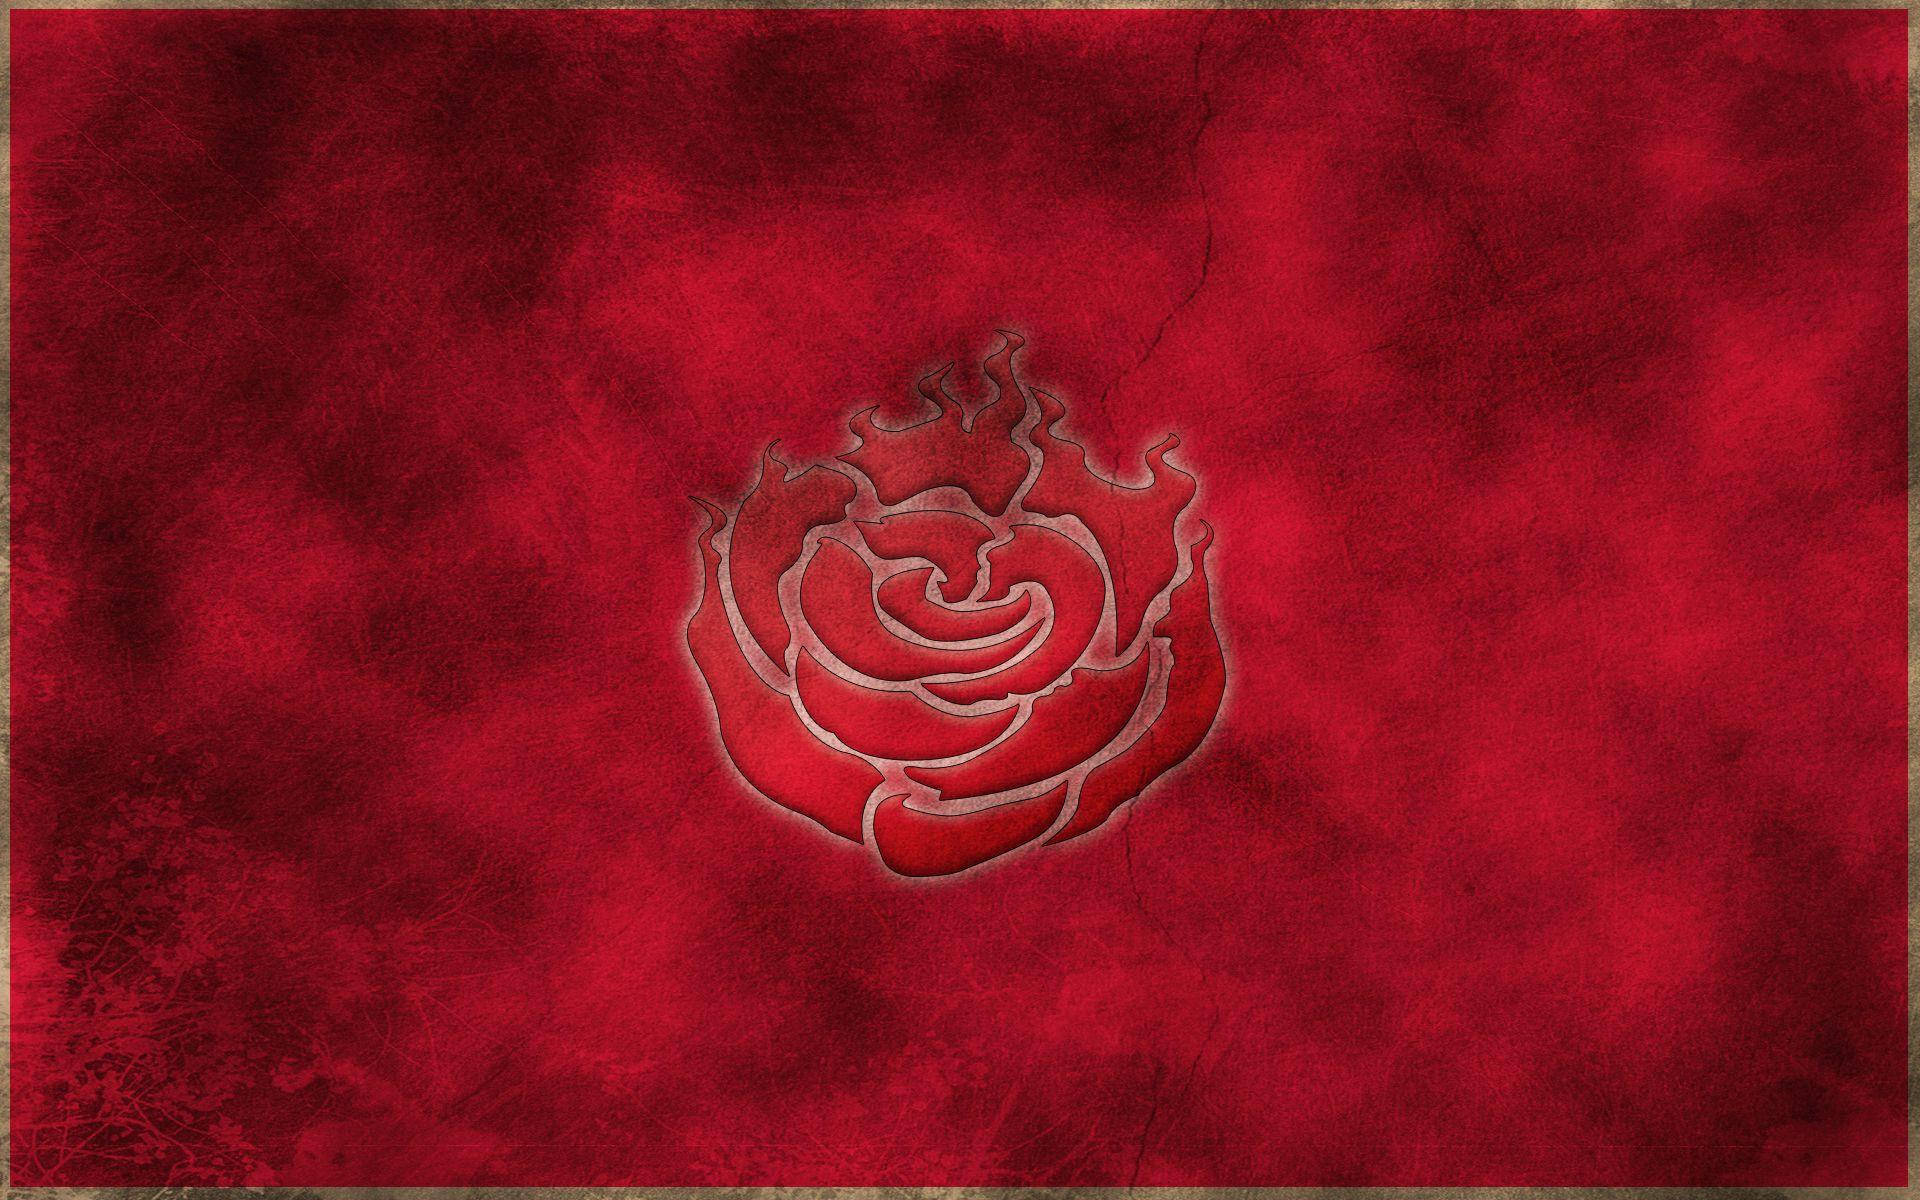 Anime Symbols RWBY Ruby Rose Emblem Red Aesthetic Wallpaper